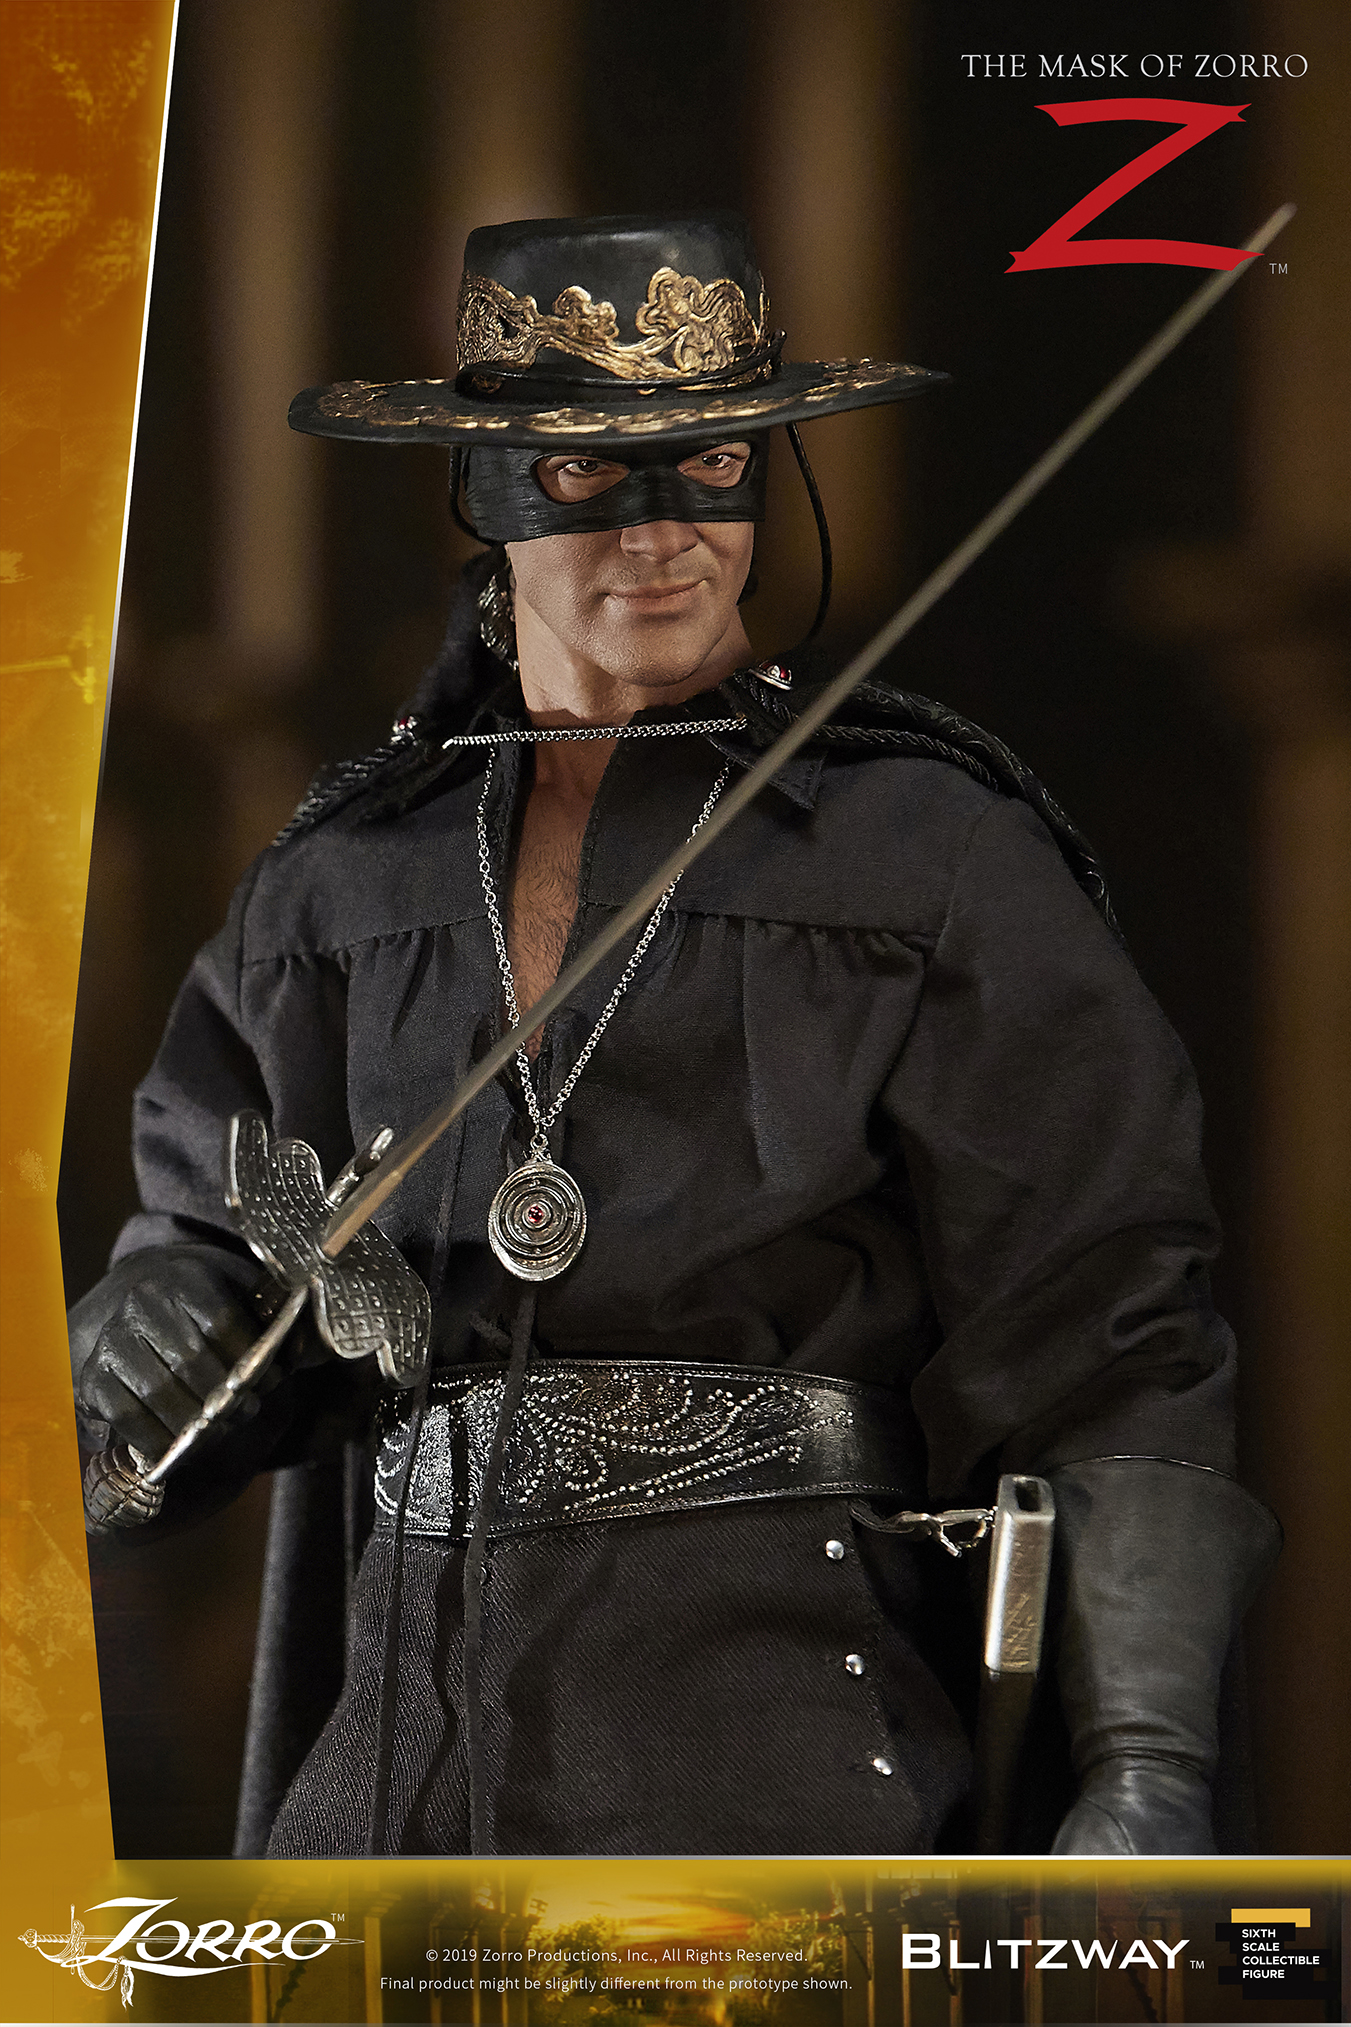 Blitzway: Zorro (The Mask of Zorro)